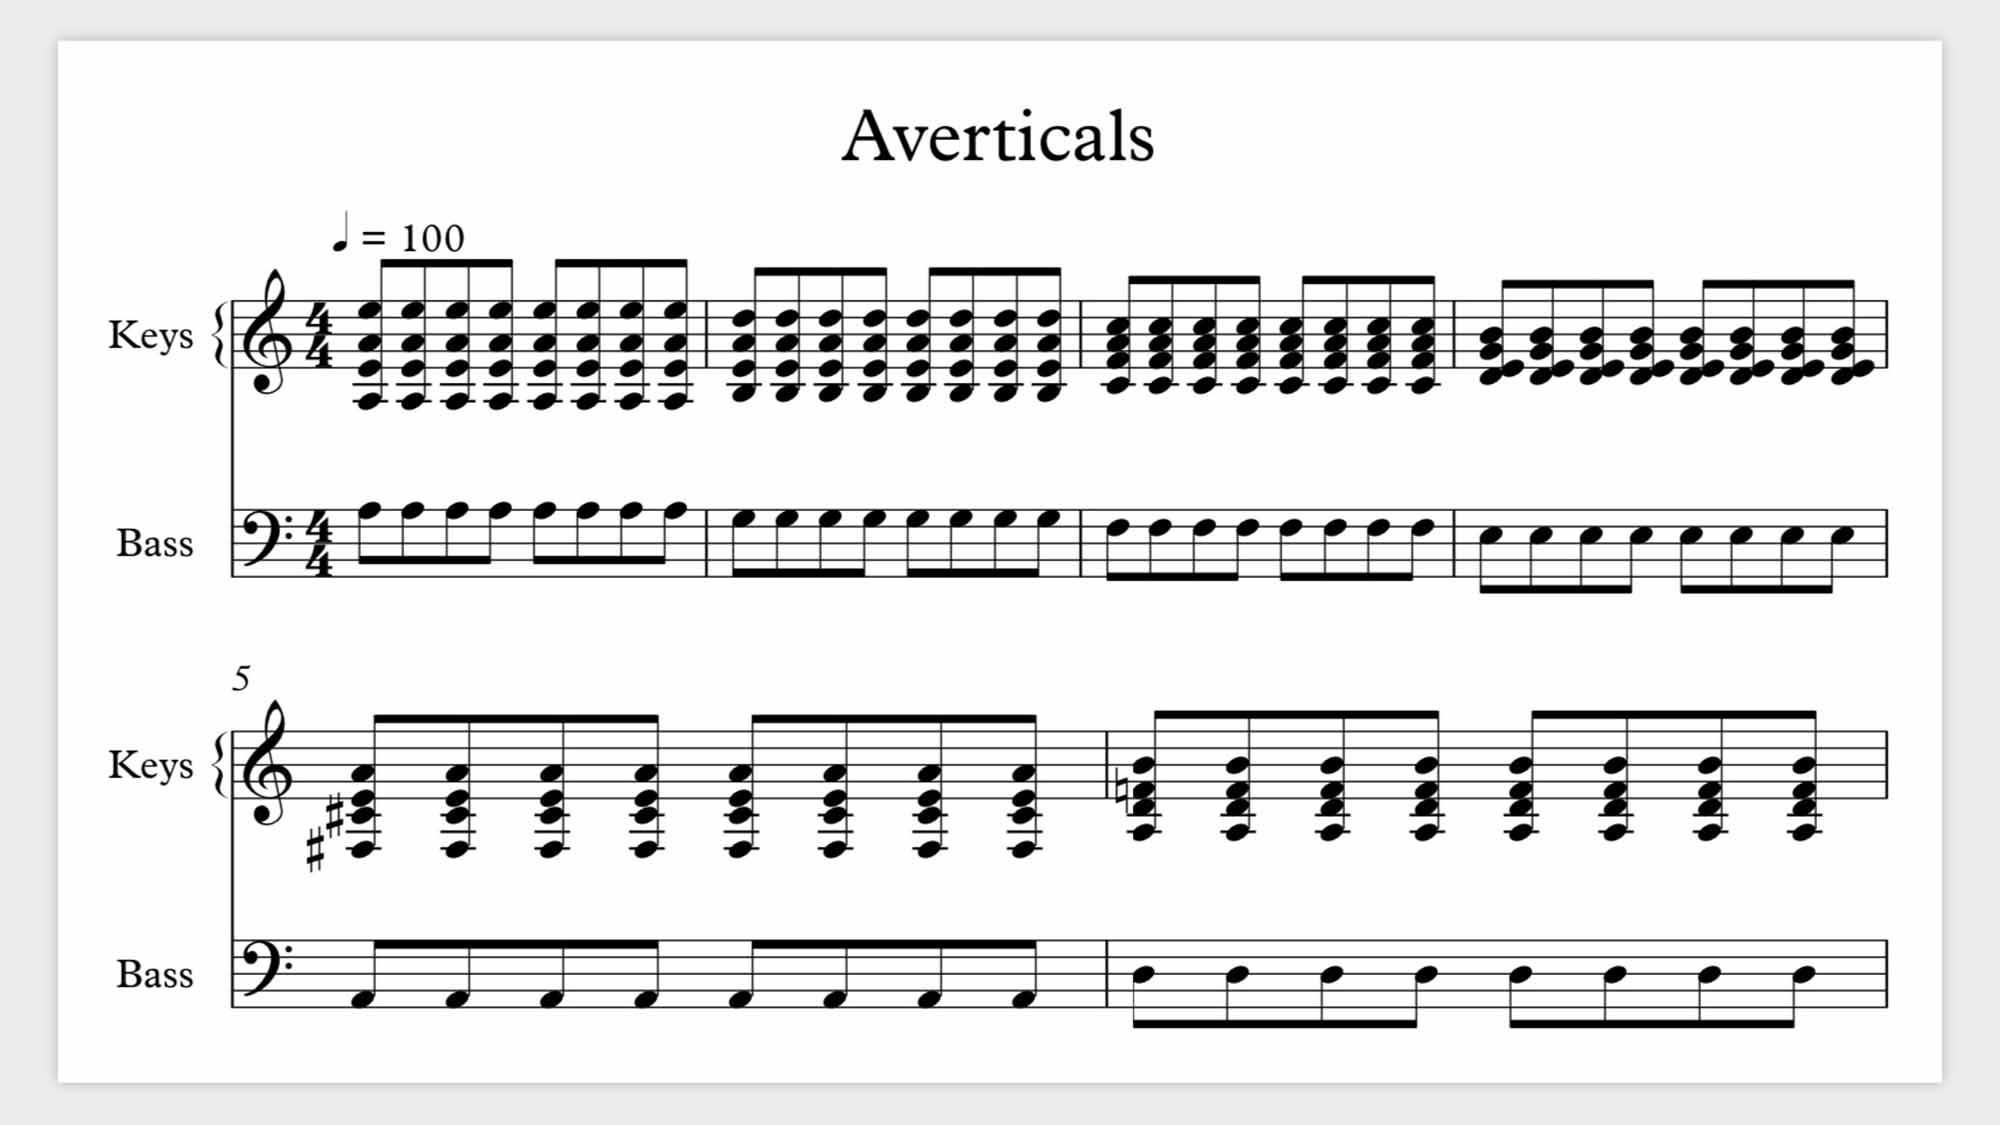 Averticals: Front Ensemble Mallet Keyboard Exercise.